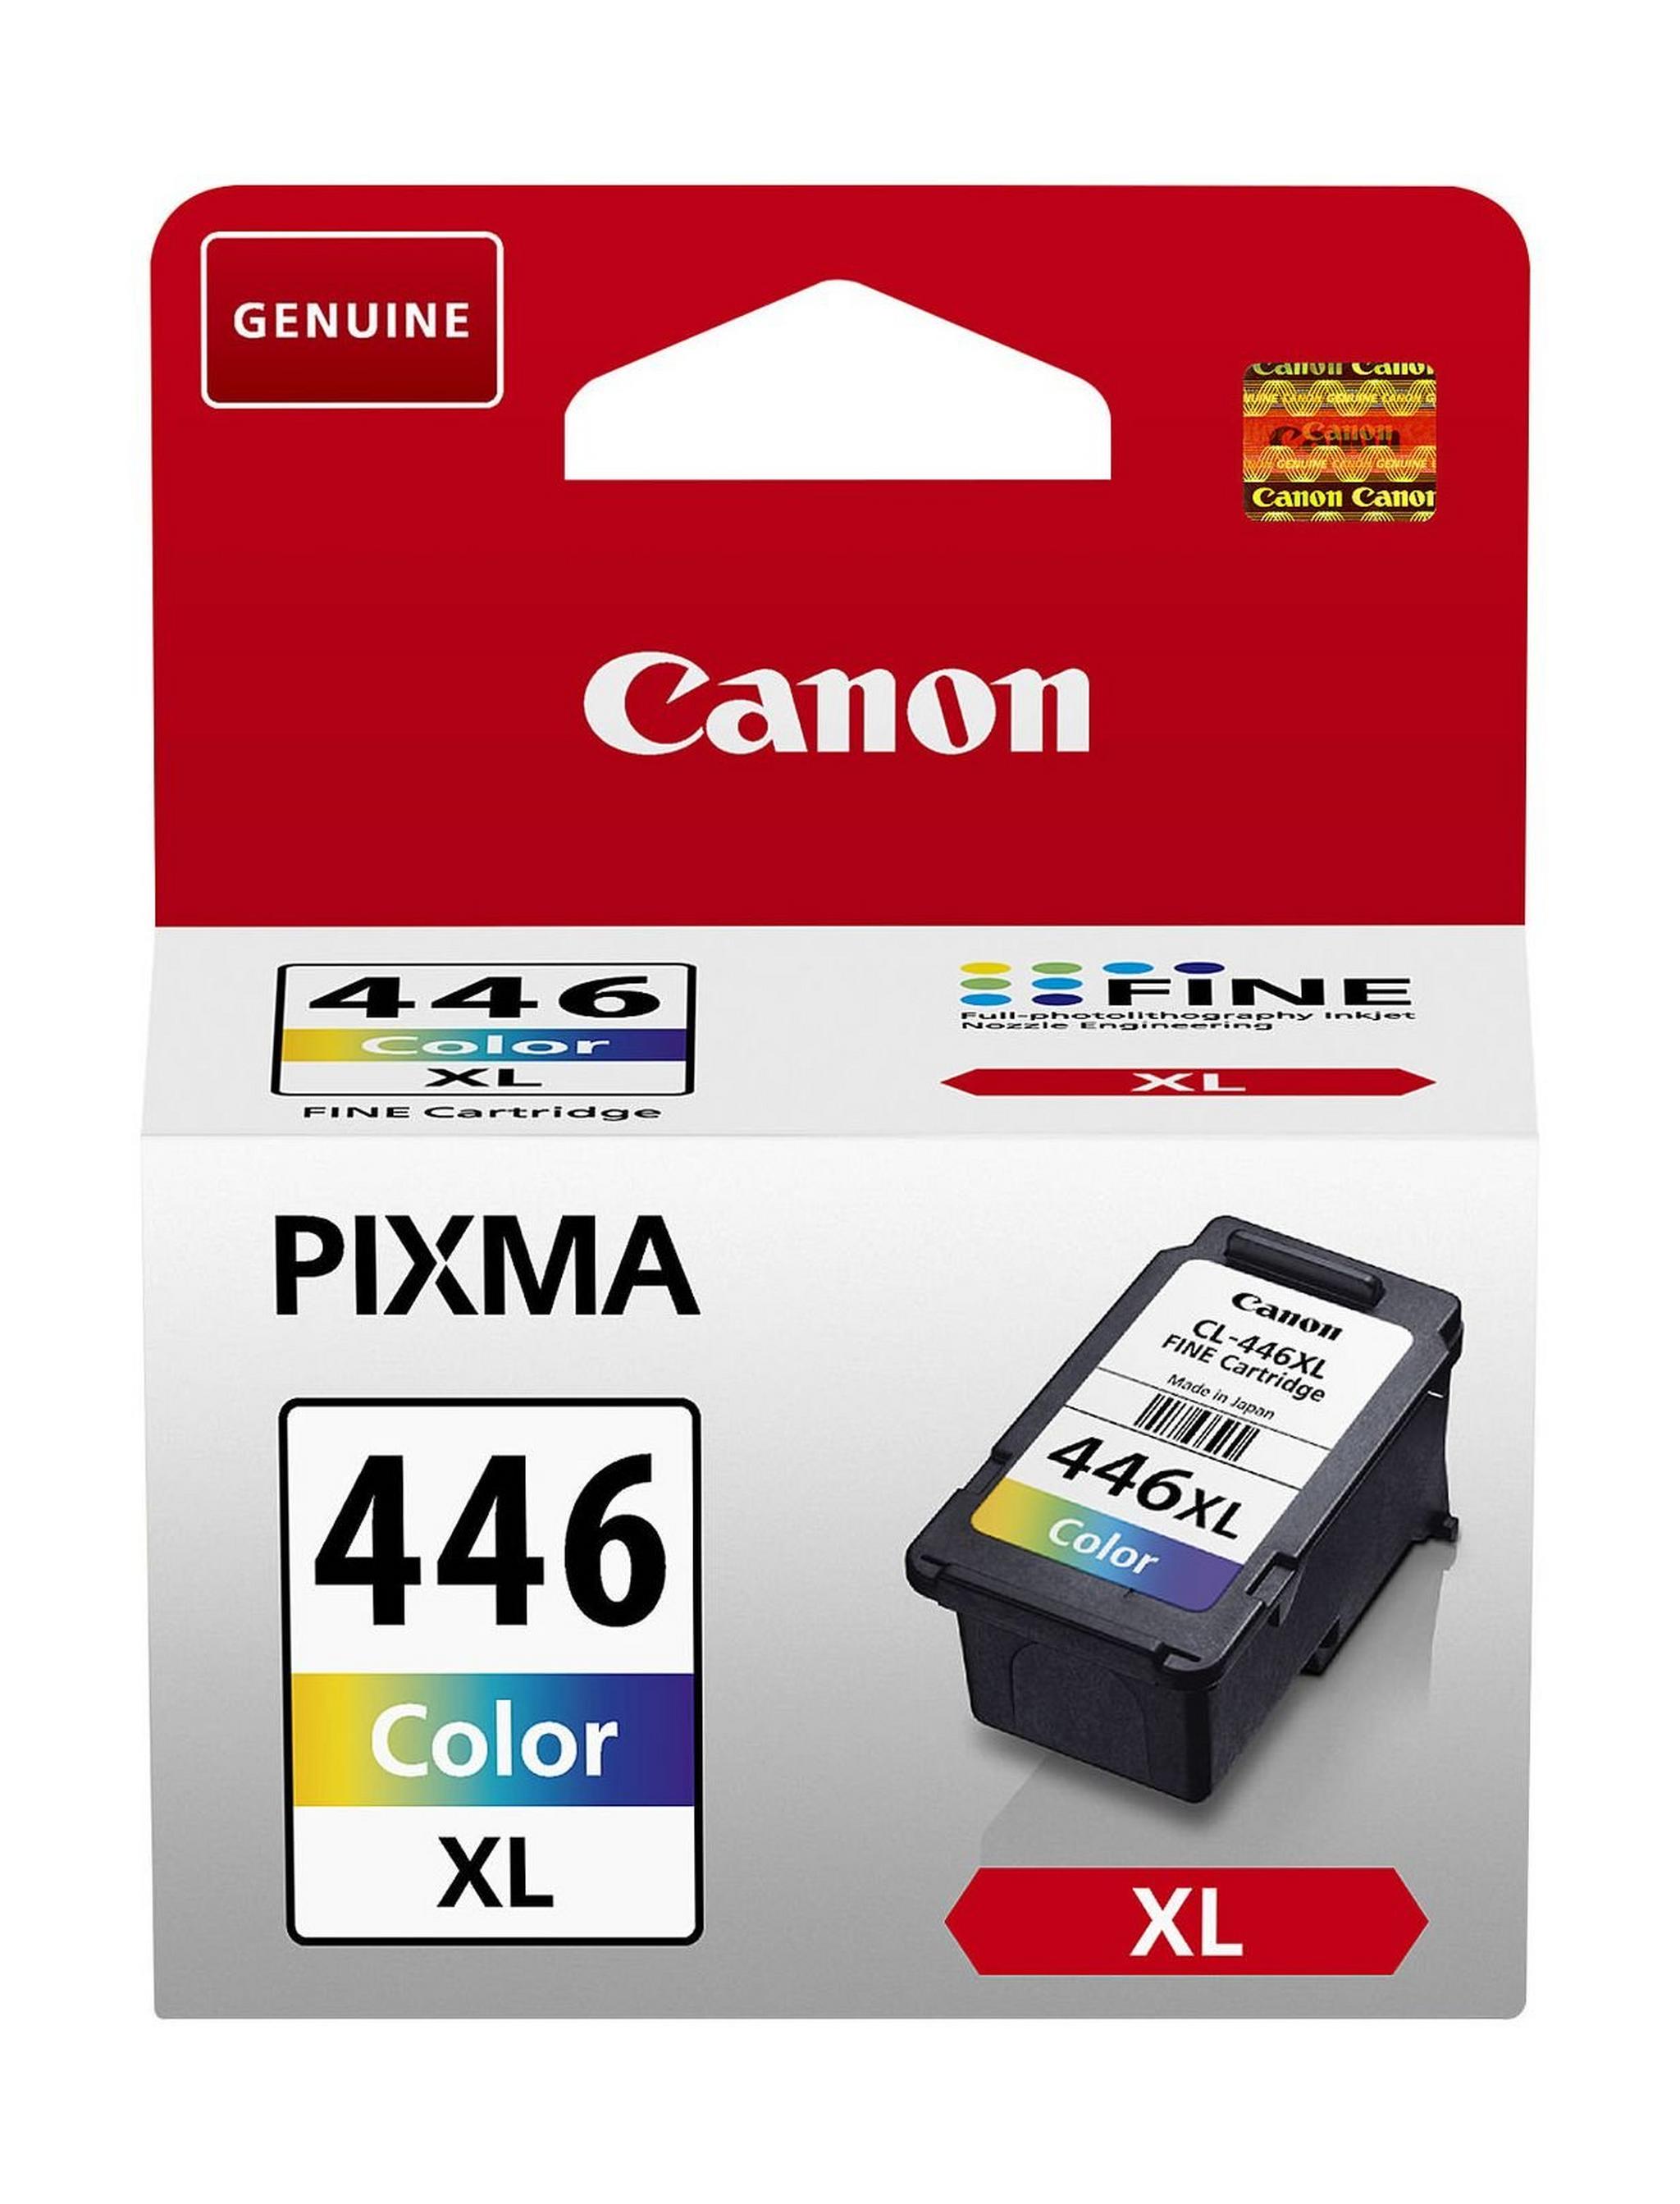 Canon CL-446XL Ink Cartridge For Inkjet Printing (8284B001AA) - Multi